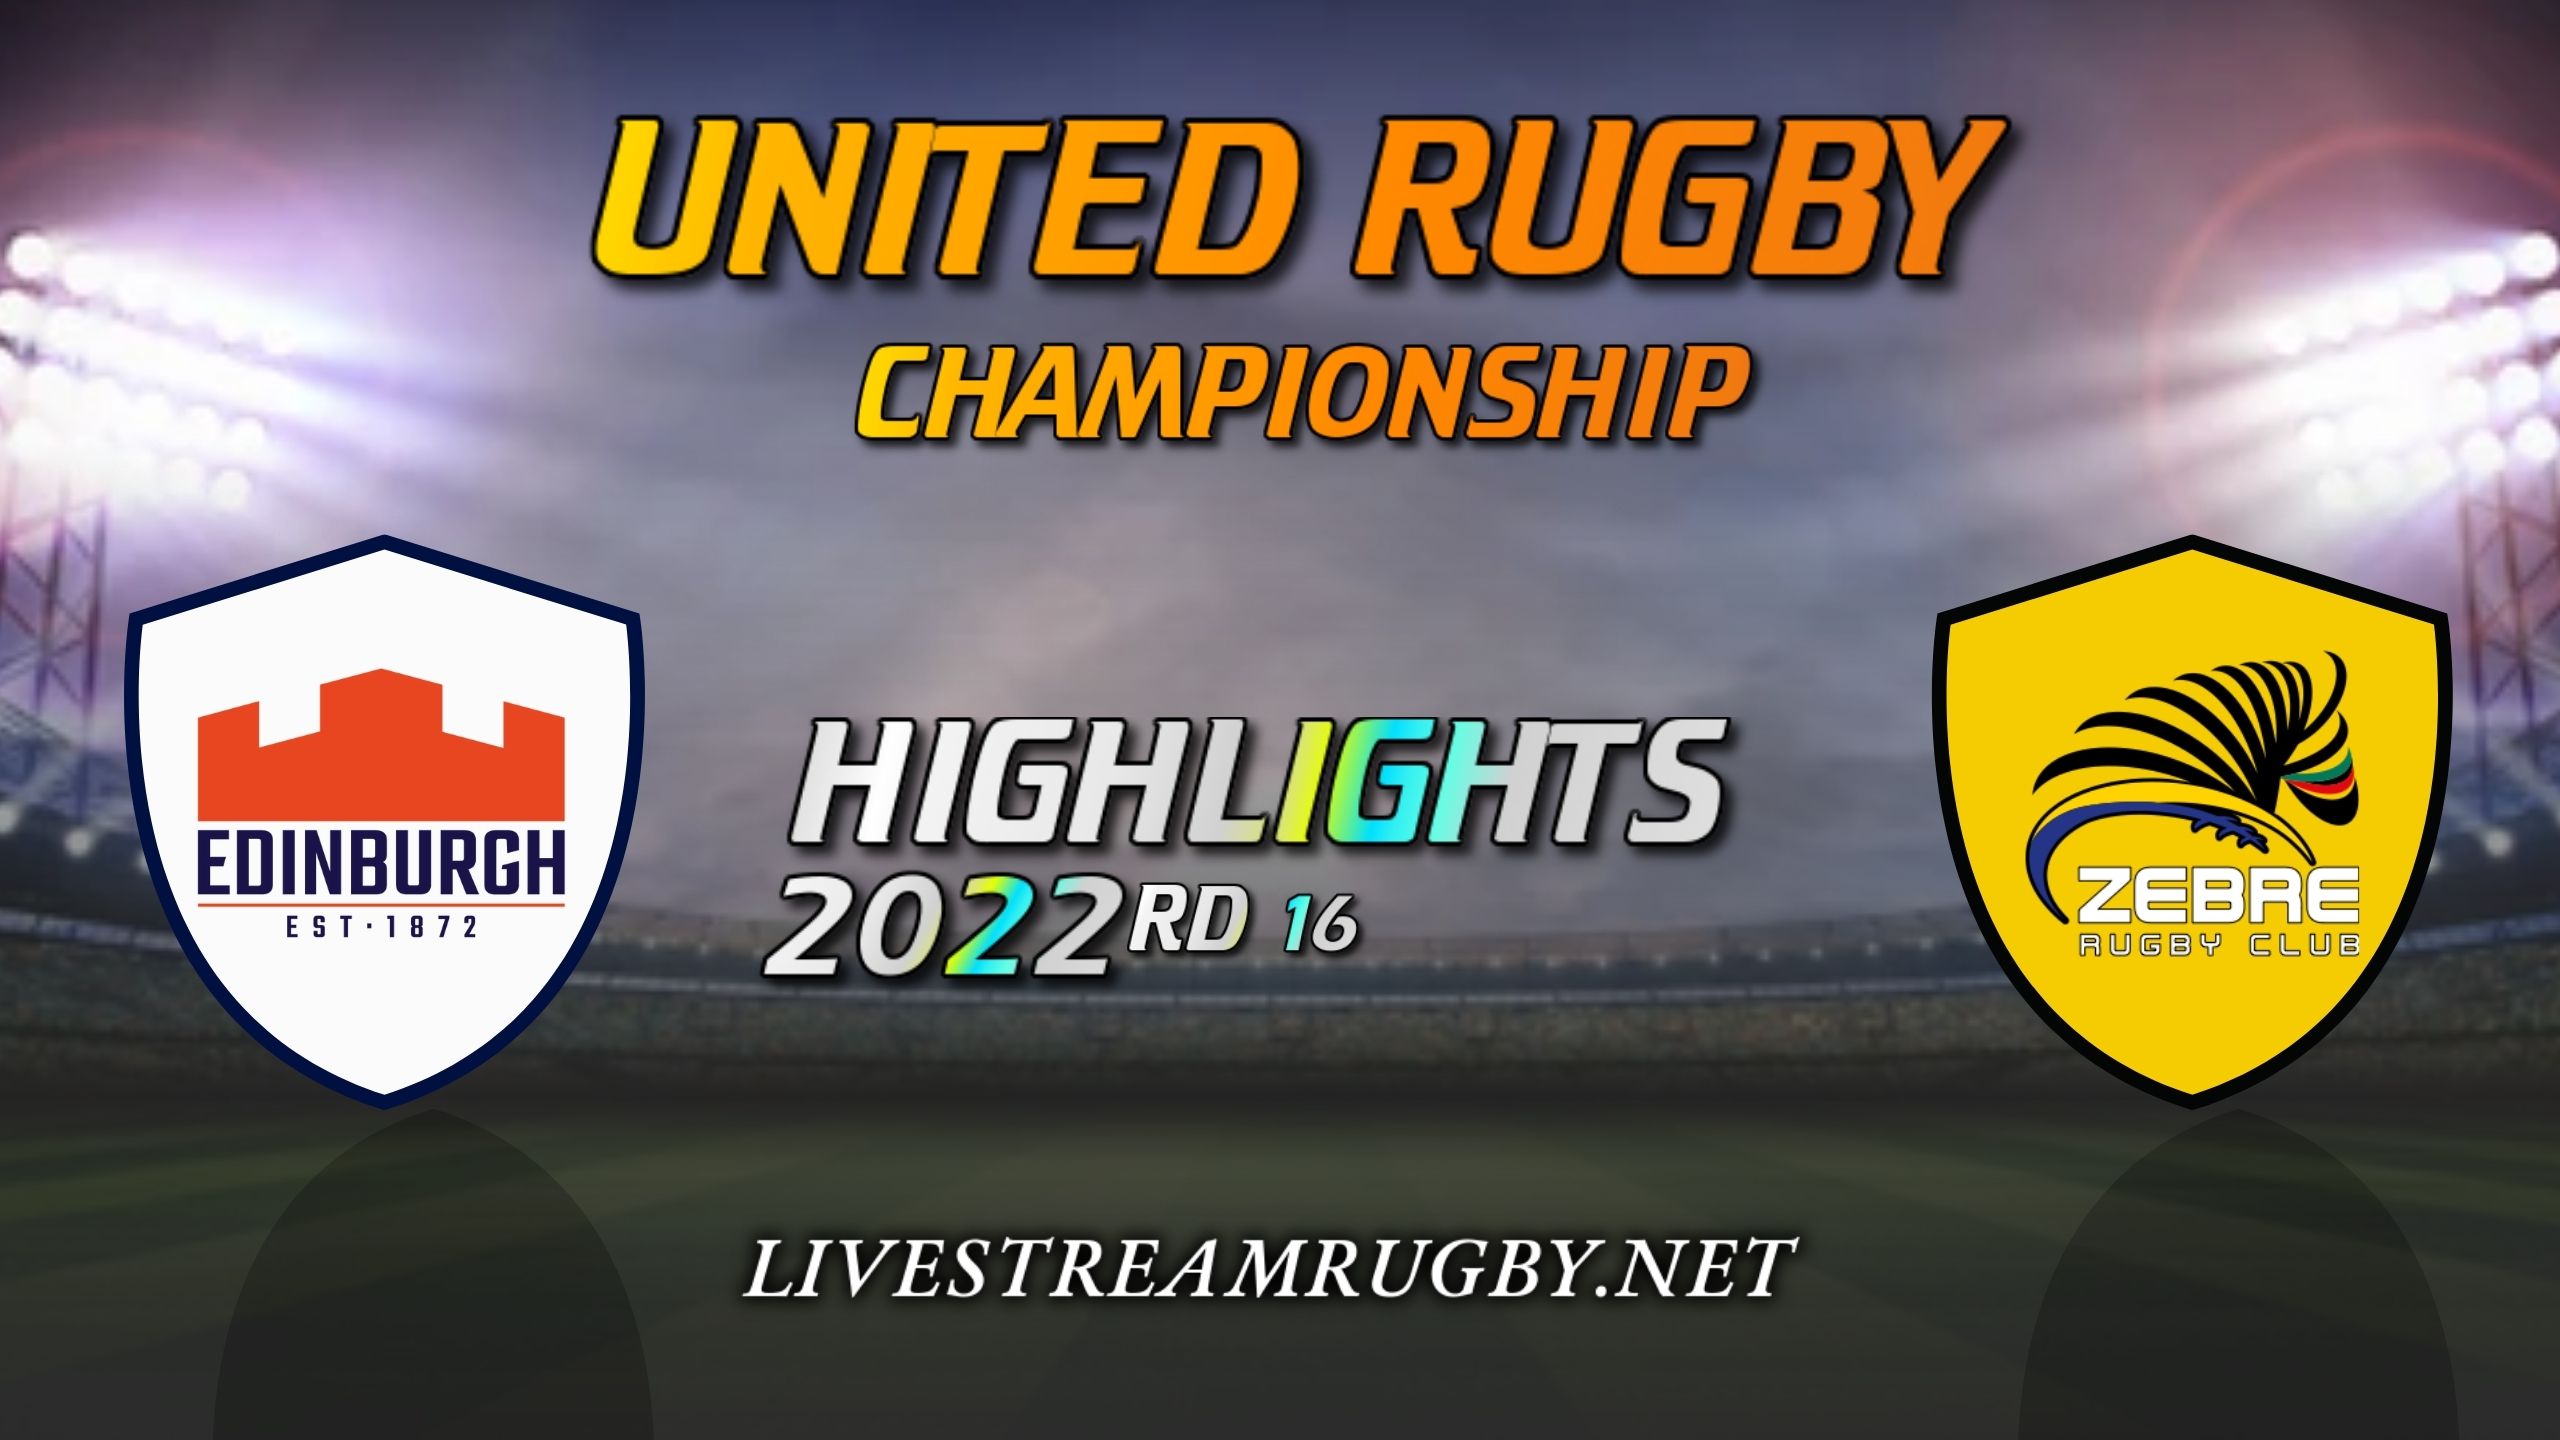 Edinburgh Vs Zebre Highlights 2022 Rd 16 United Rugby